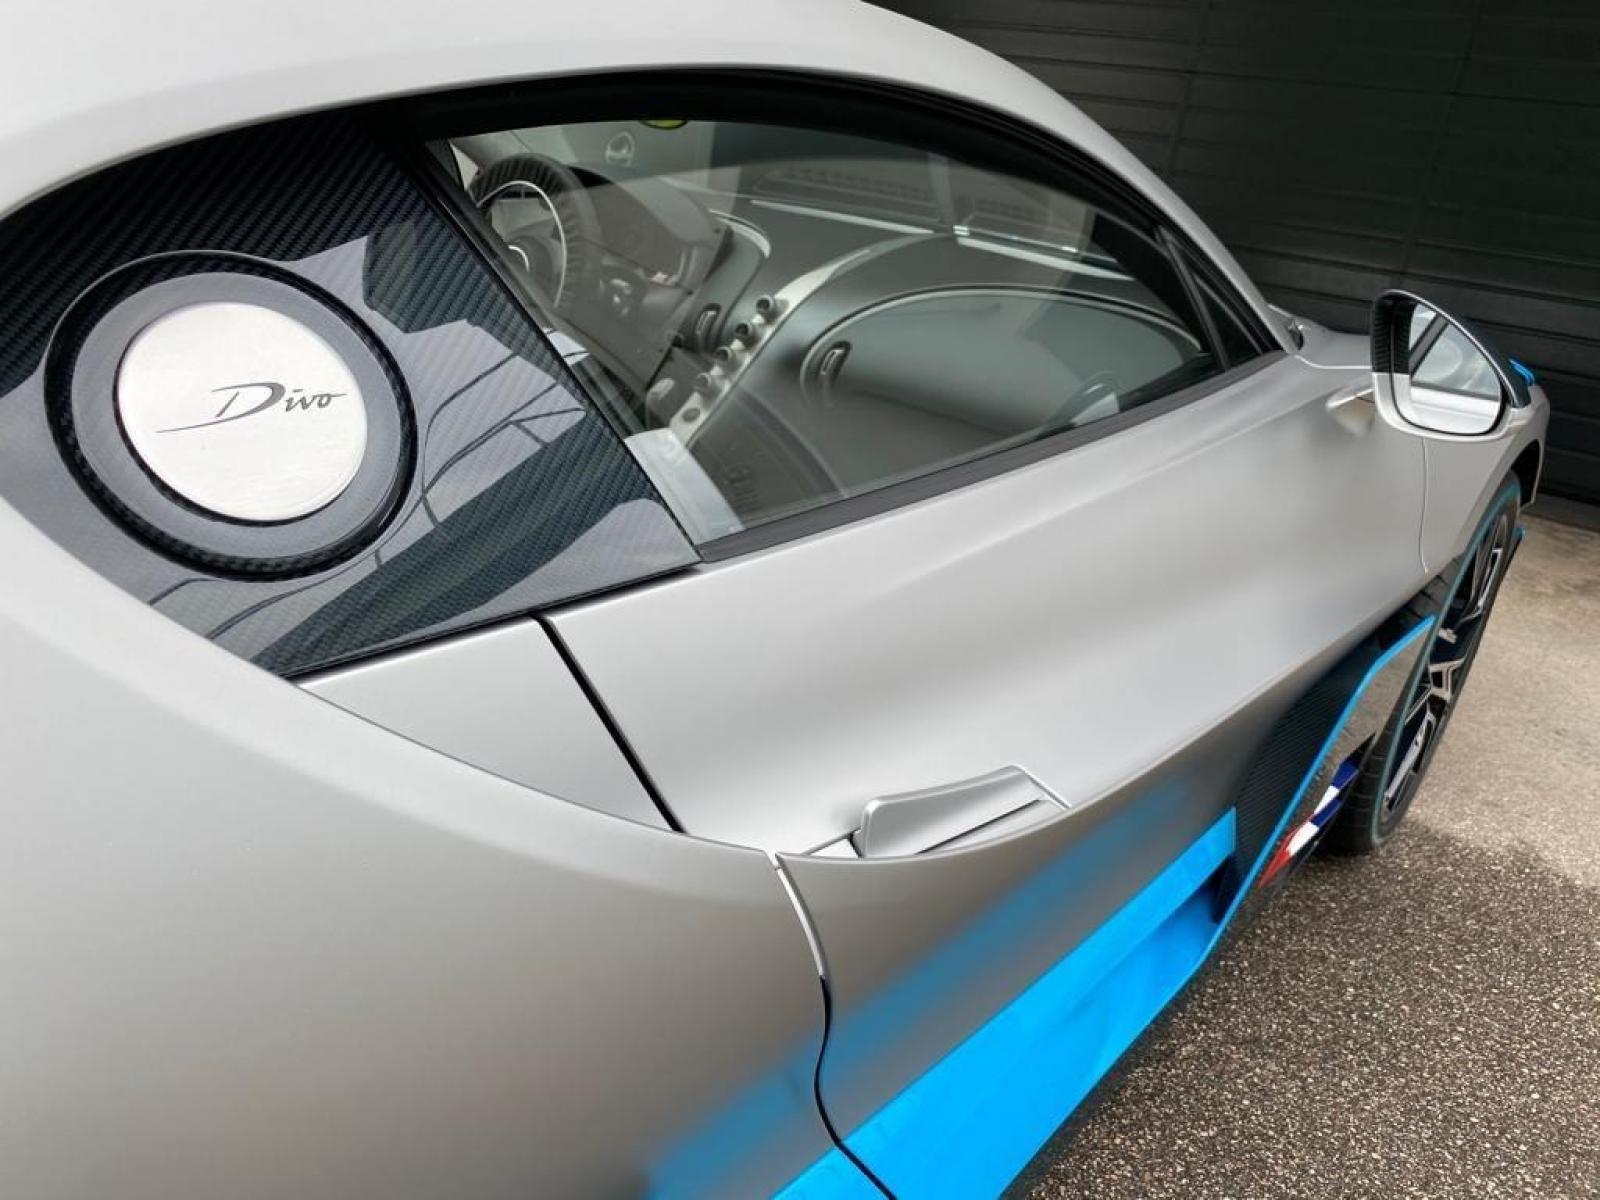 2020 Blue /Gray Bugatti Divo , 0.000000, 0.000000 - BUGATTI DIVO Argent matt / Divo Racing Blue, glossy / Divo Titanium Grey, Int Black / grey Brake caliper: Grey - Photo #5